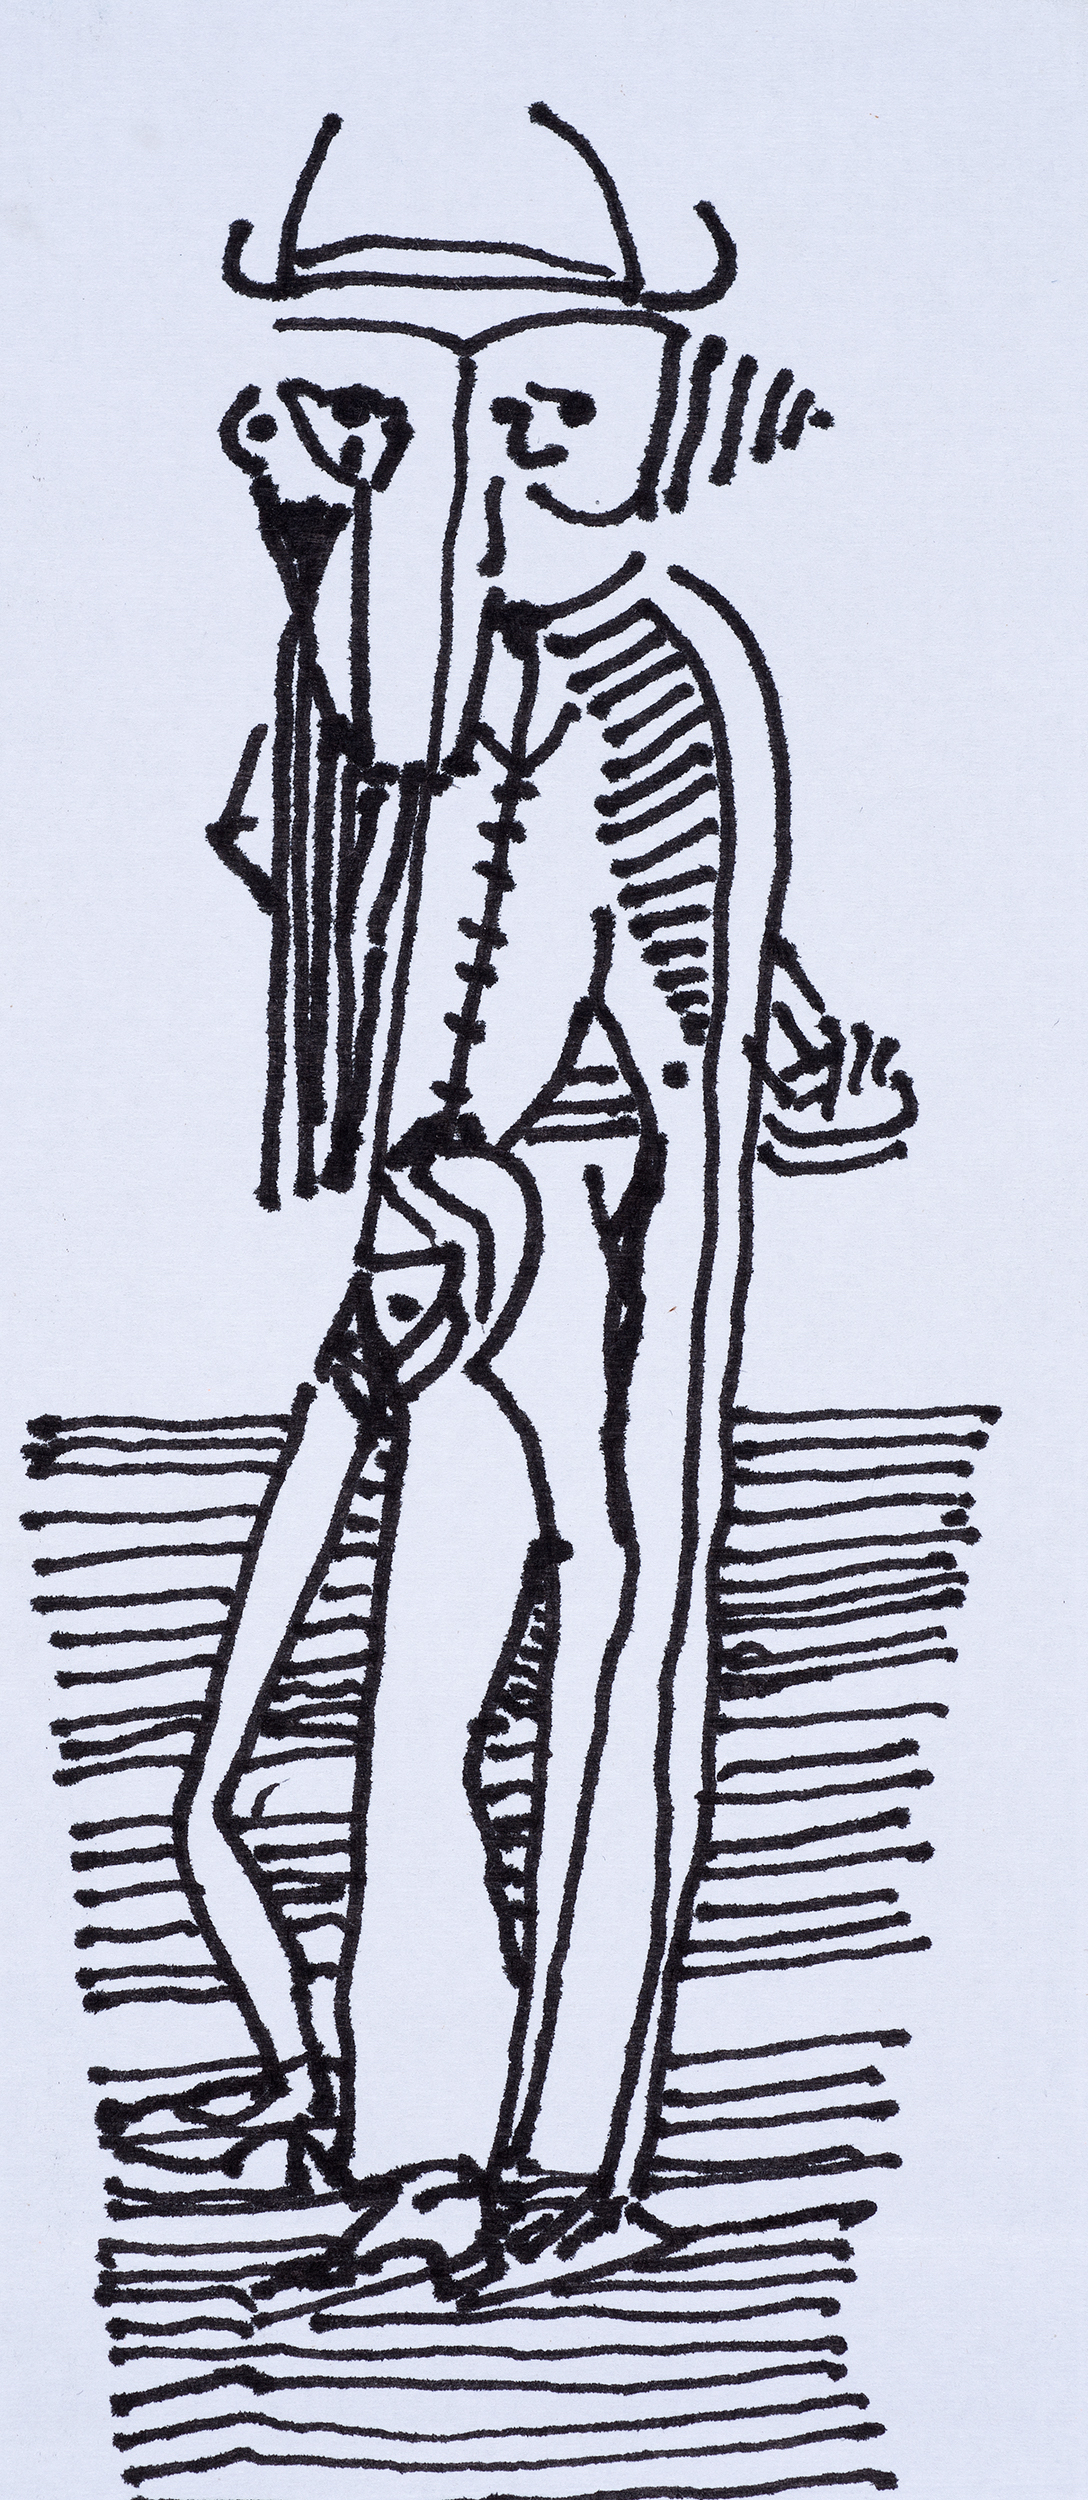 A narrow drawing of a human figure